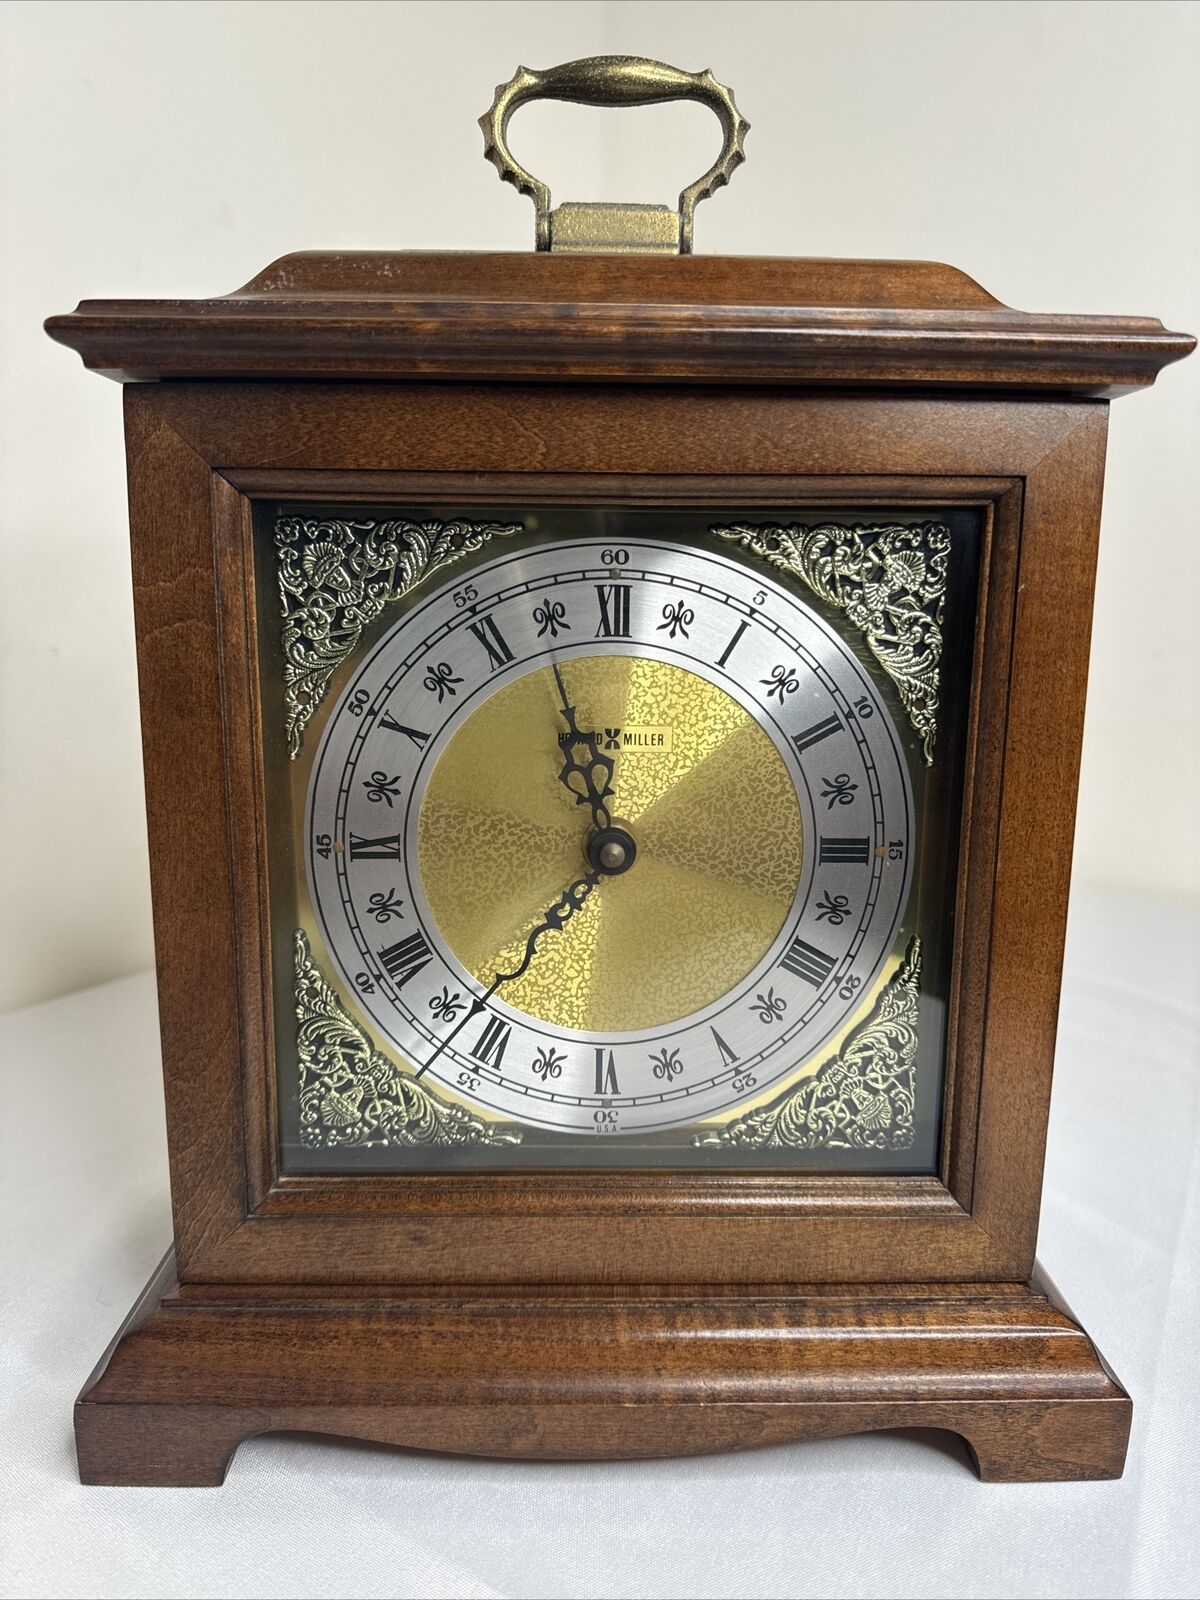 Vintage Mantle Clock With Chime Howard Miller Model 612-588 Mantle Chime Clock